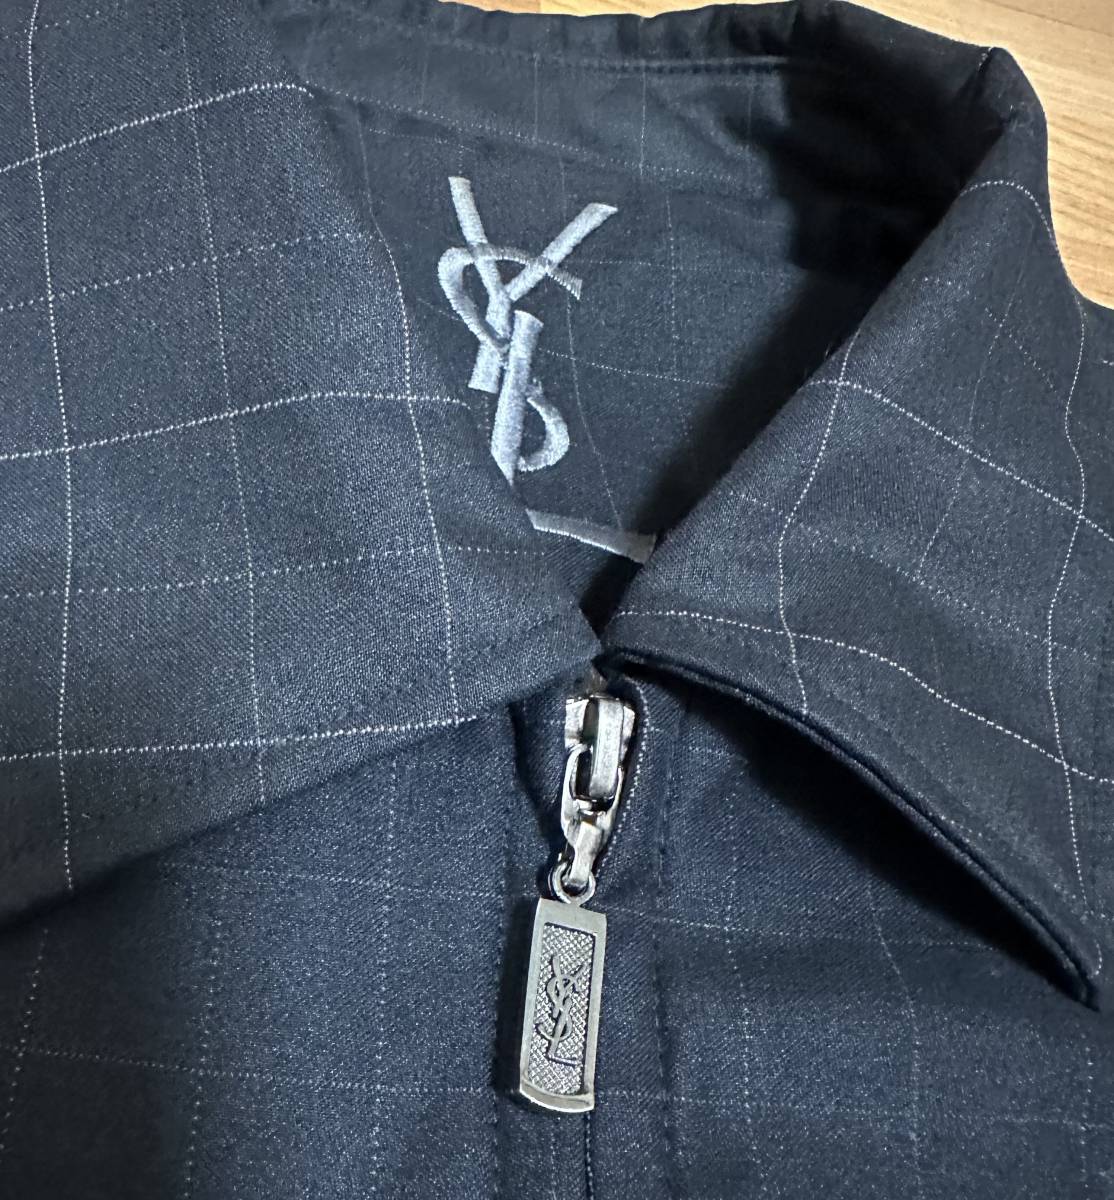 YSL vintage jacket ( Yves Saint Laurent Pour Homme 80's) made in FRANCE